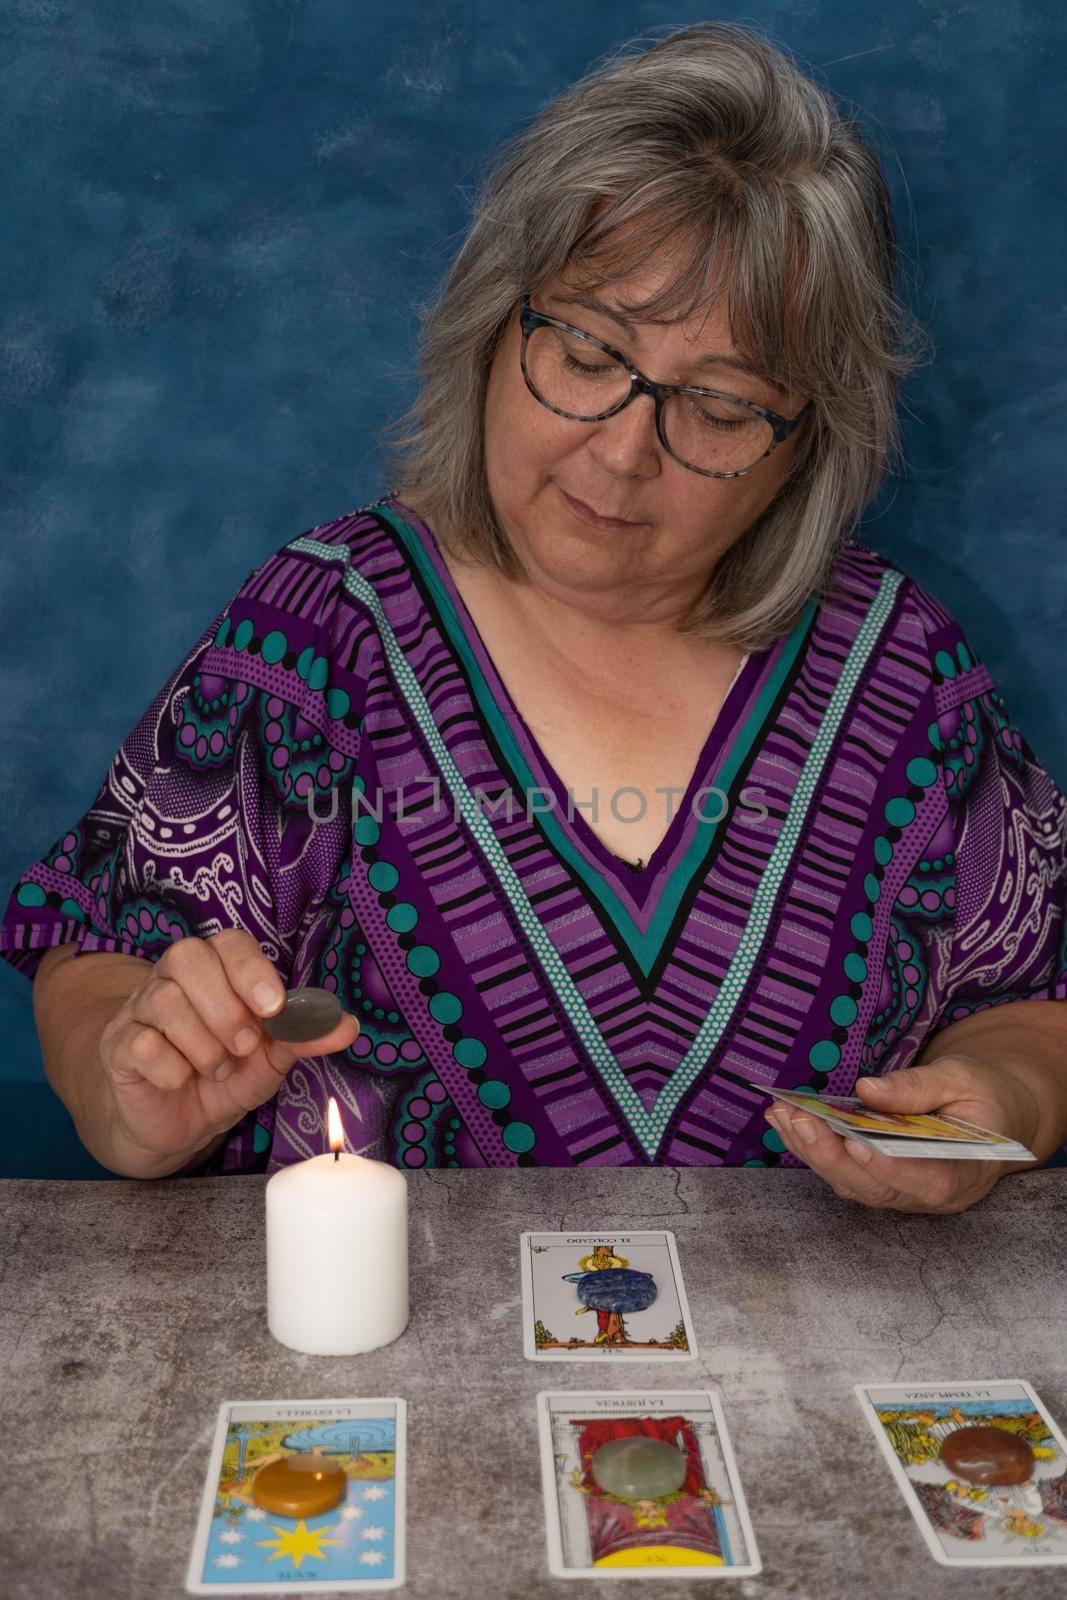 woman casting tarot cards by joseantona